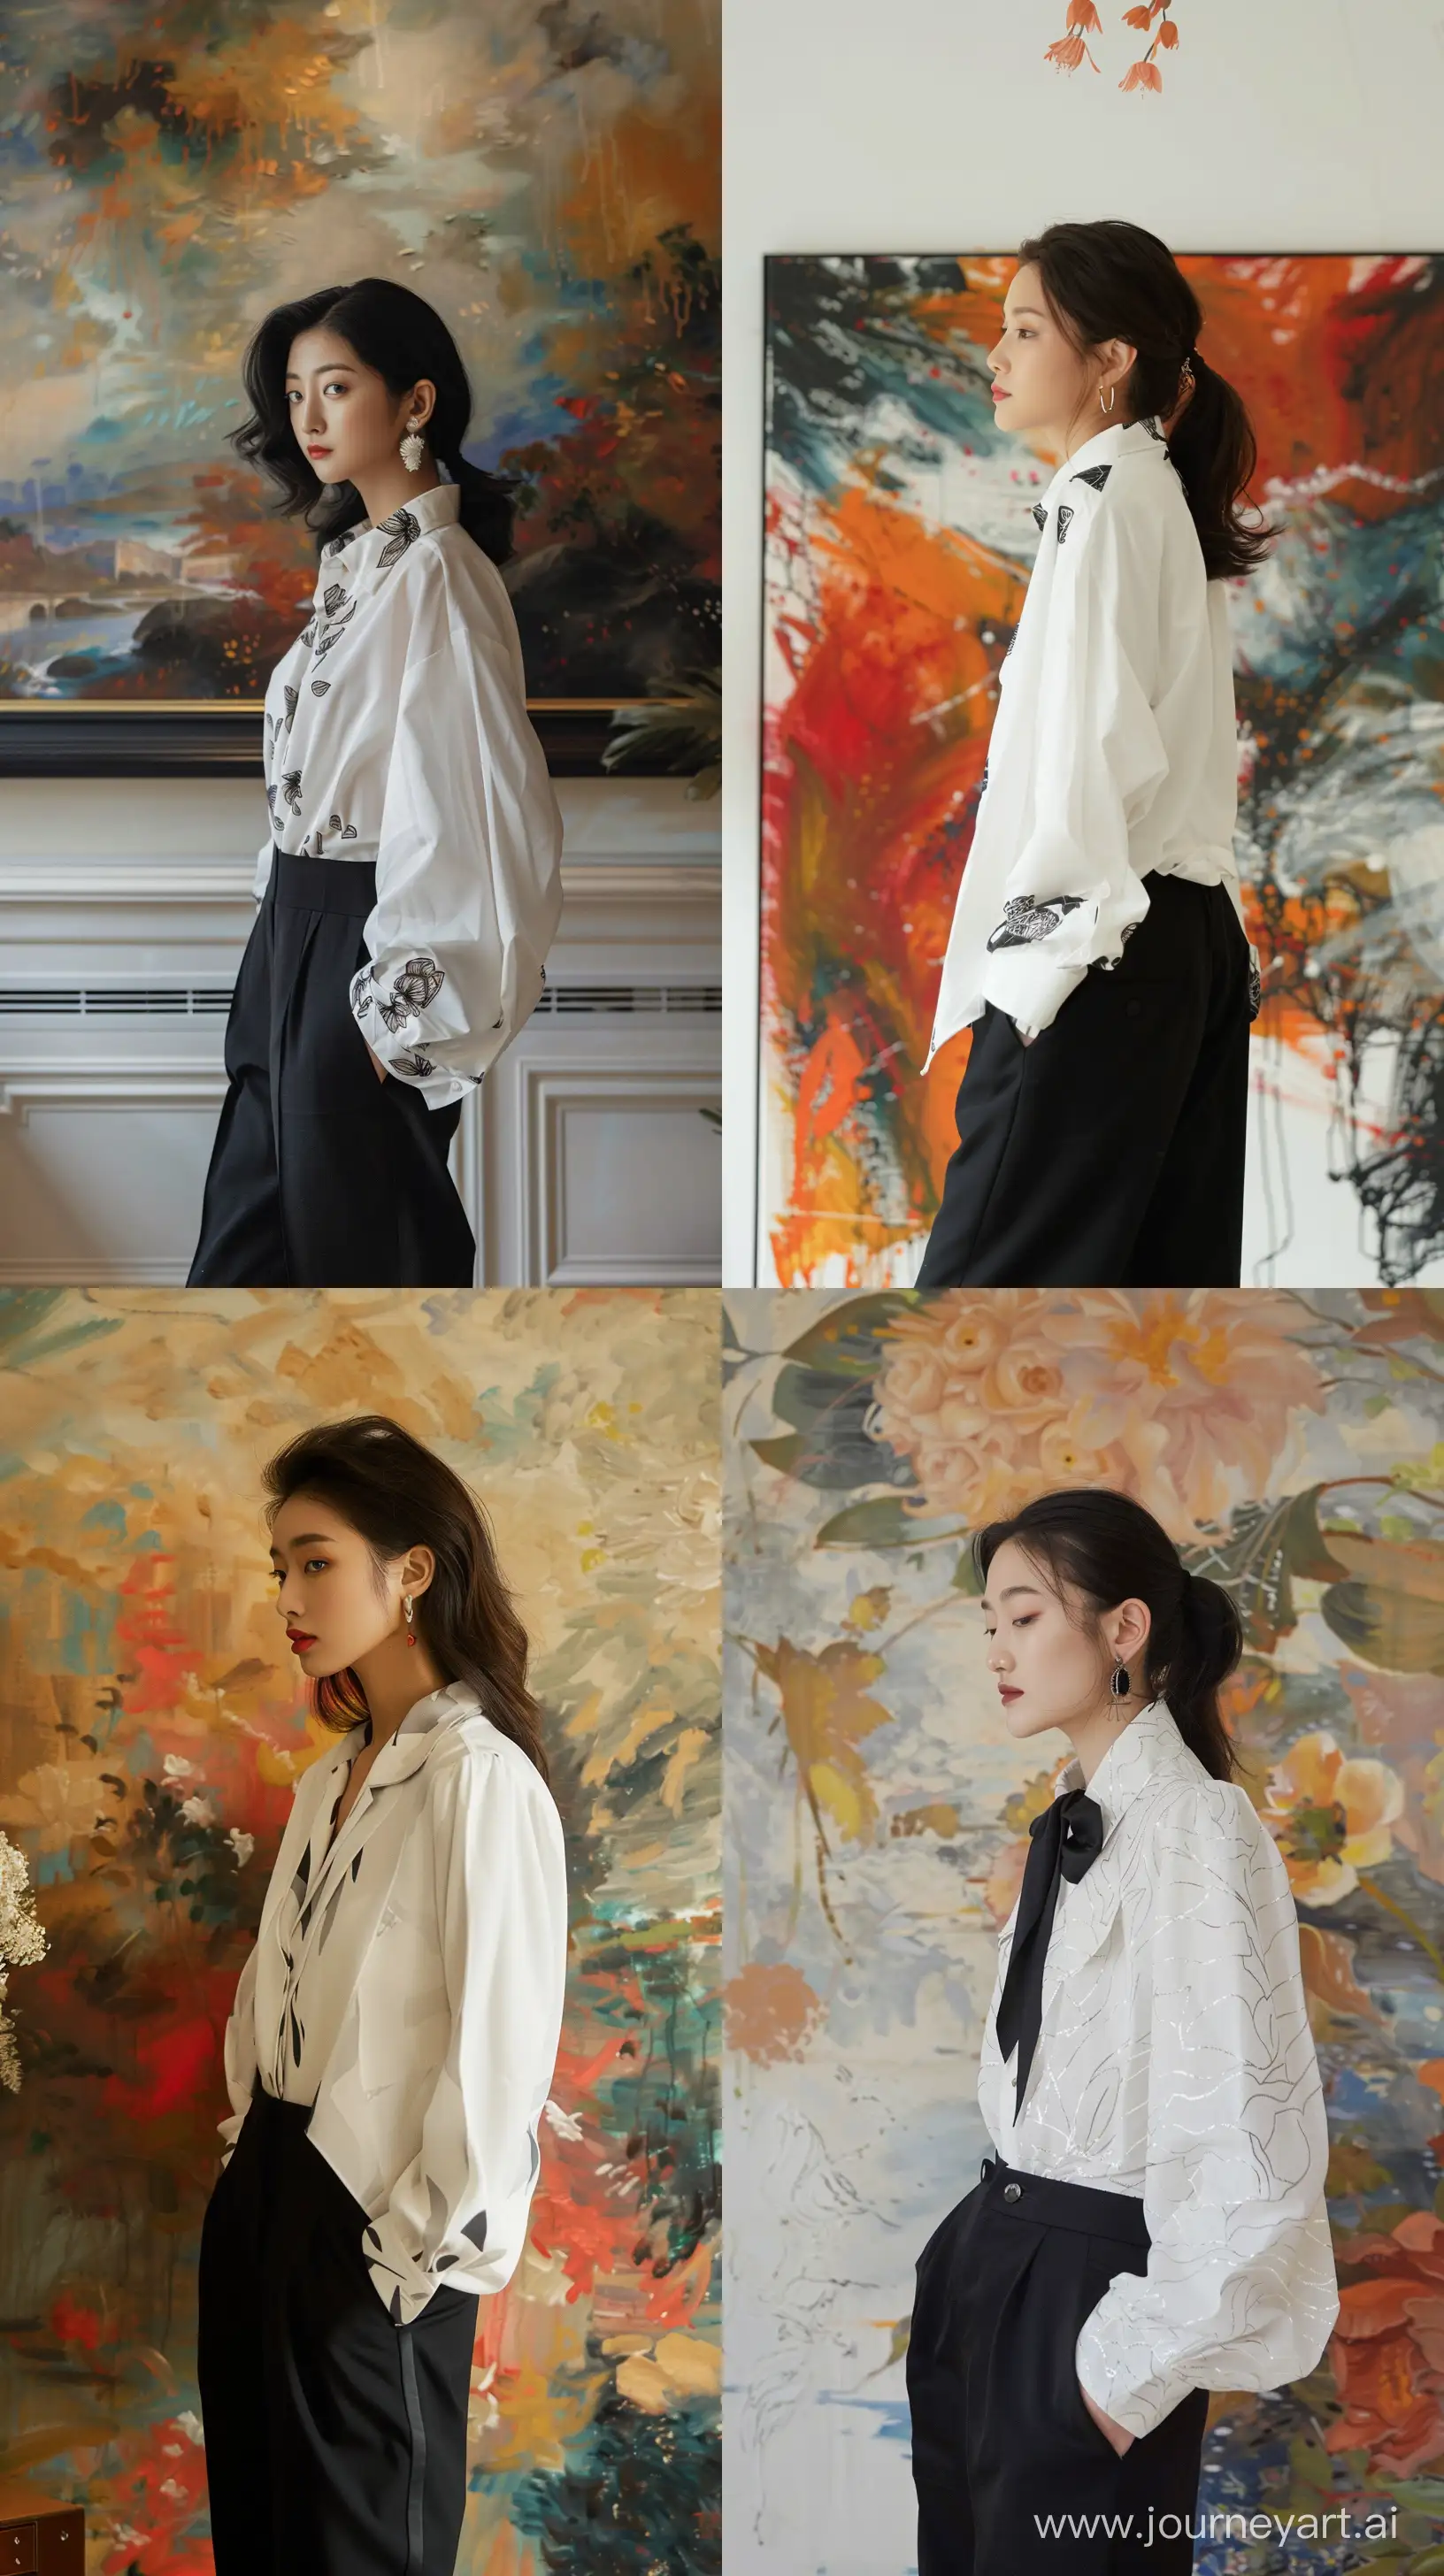 Elegant-Asian-Woman-in-Stylish-Attire-Admiring-Art